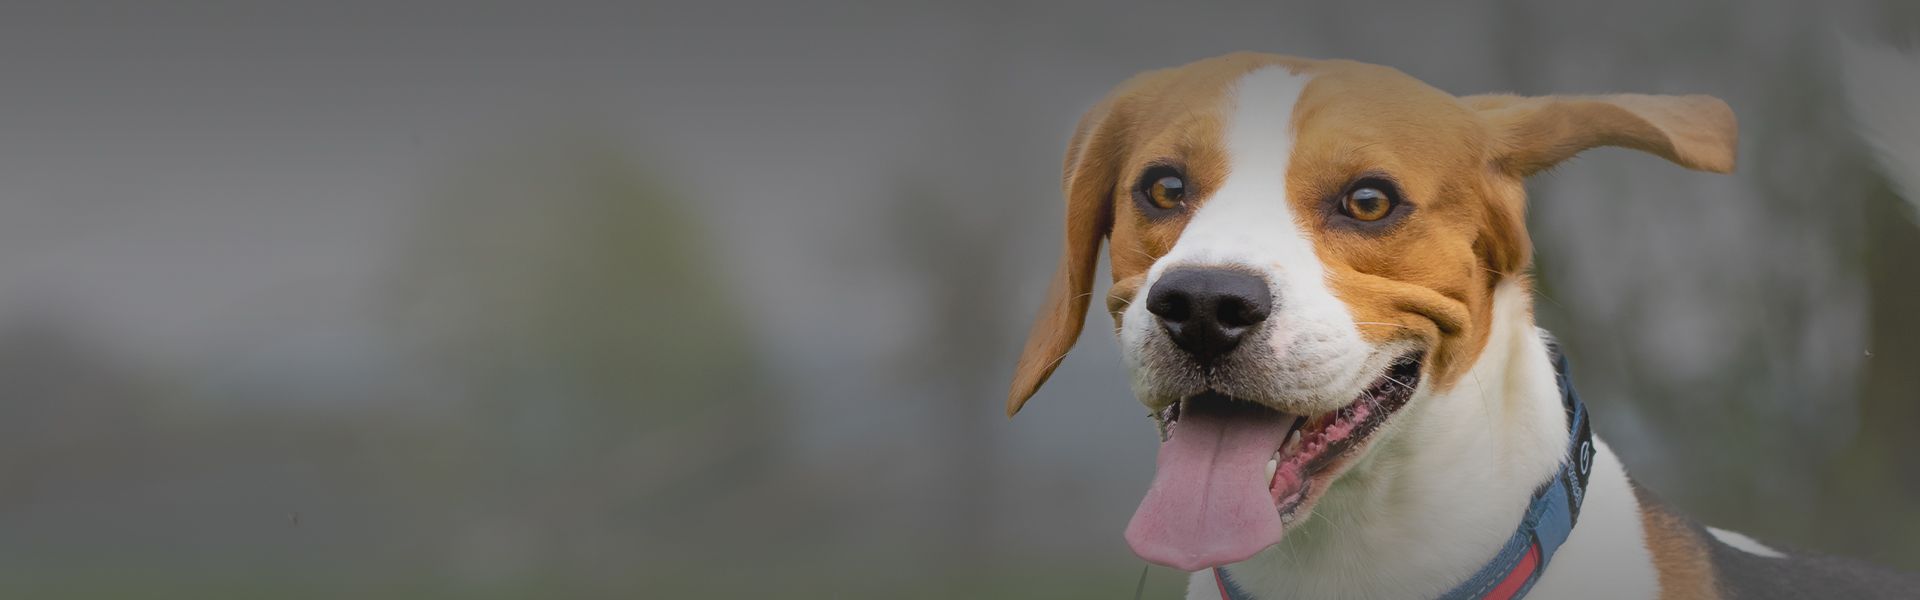 happy beagle dog running